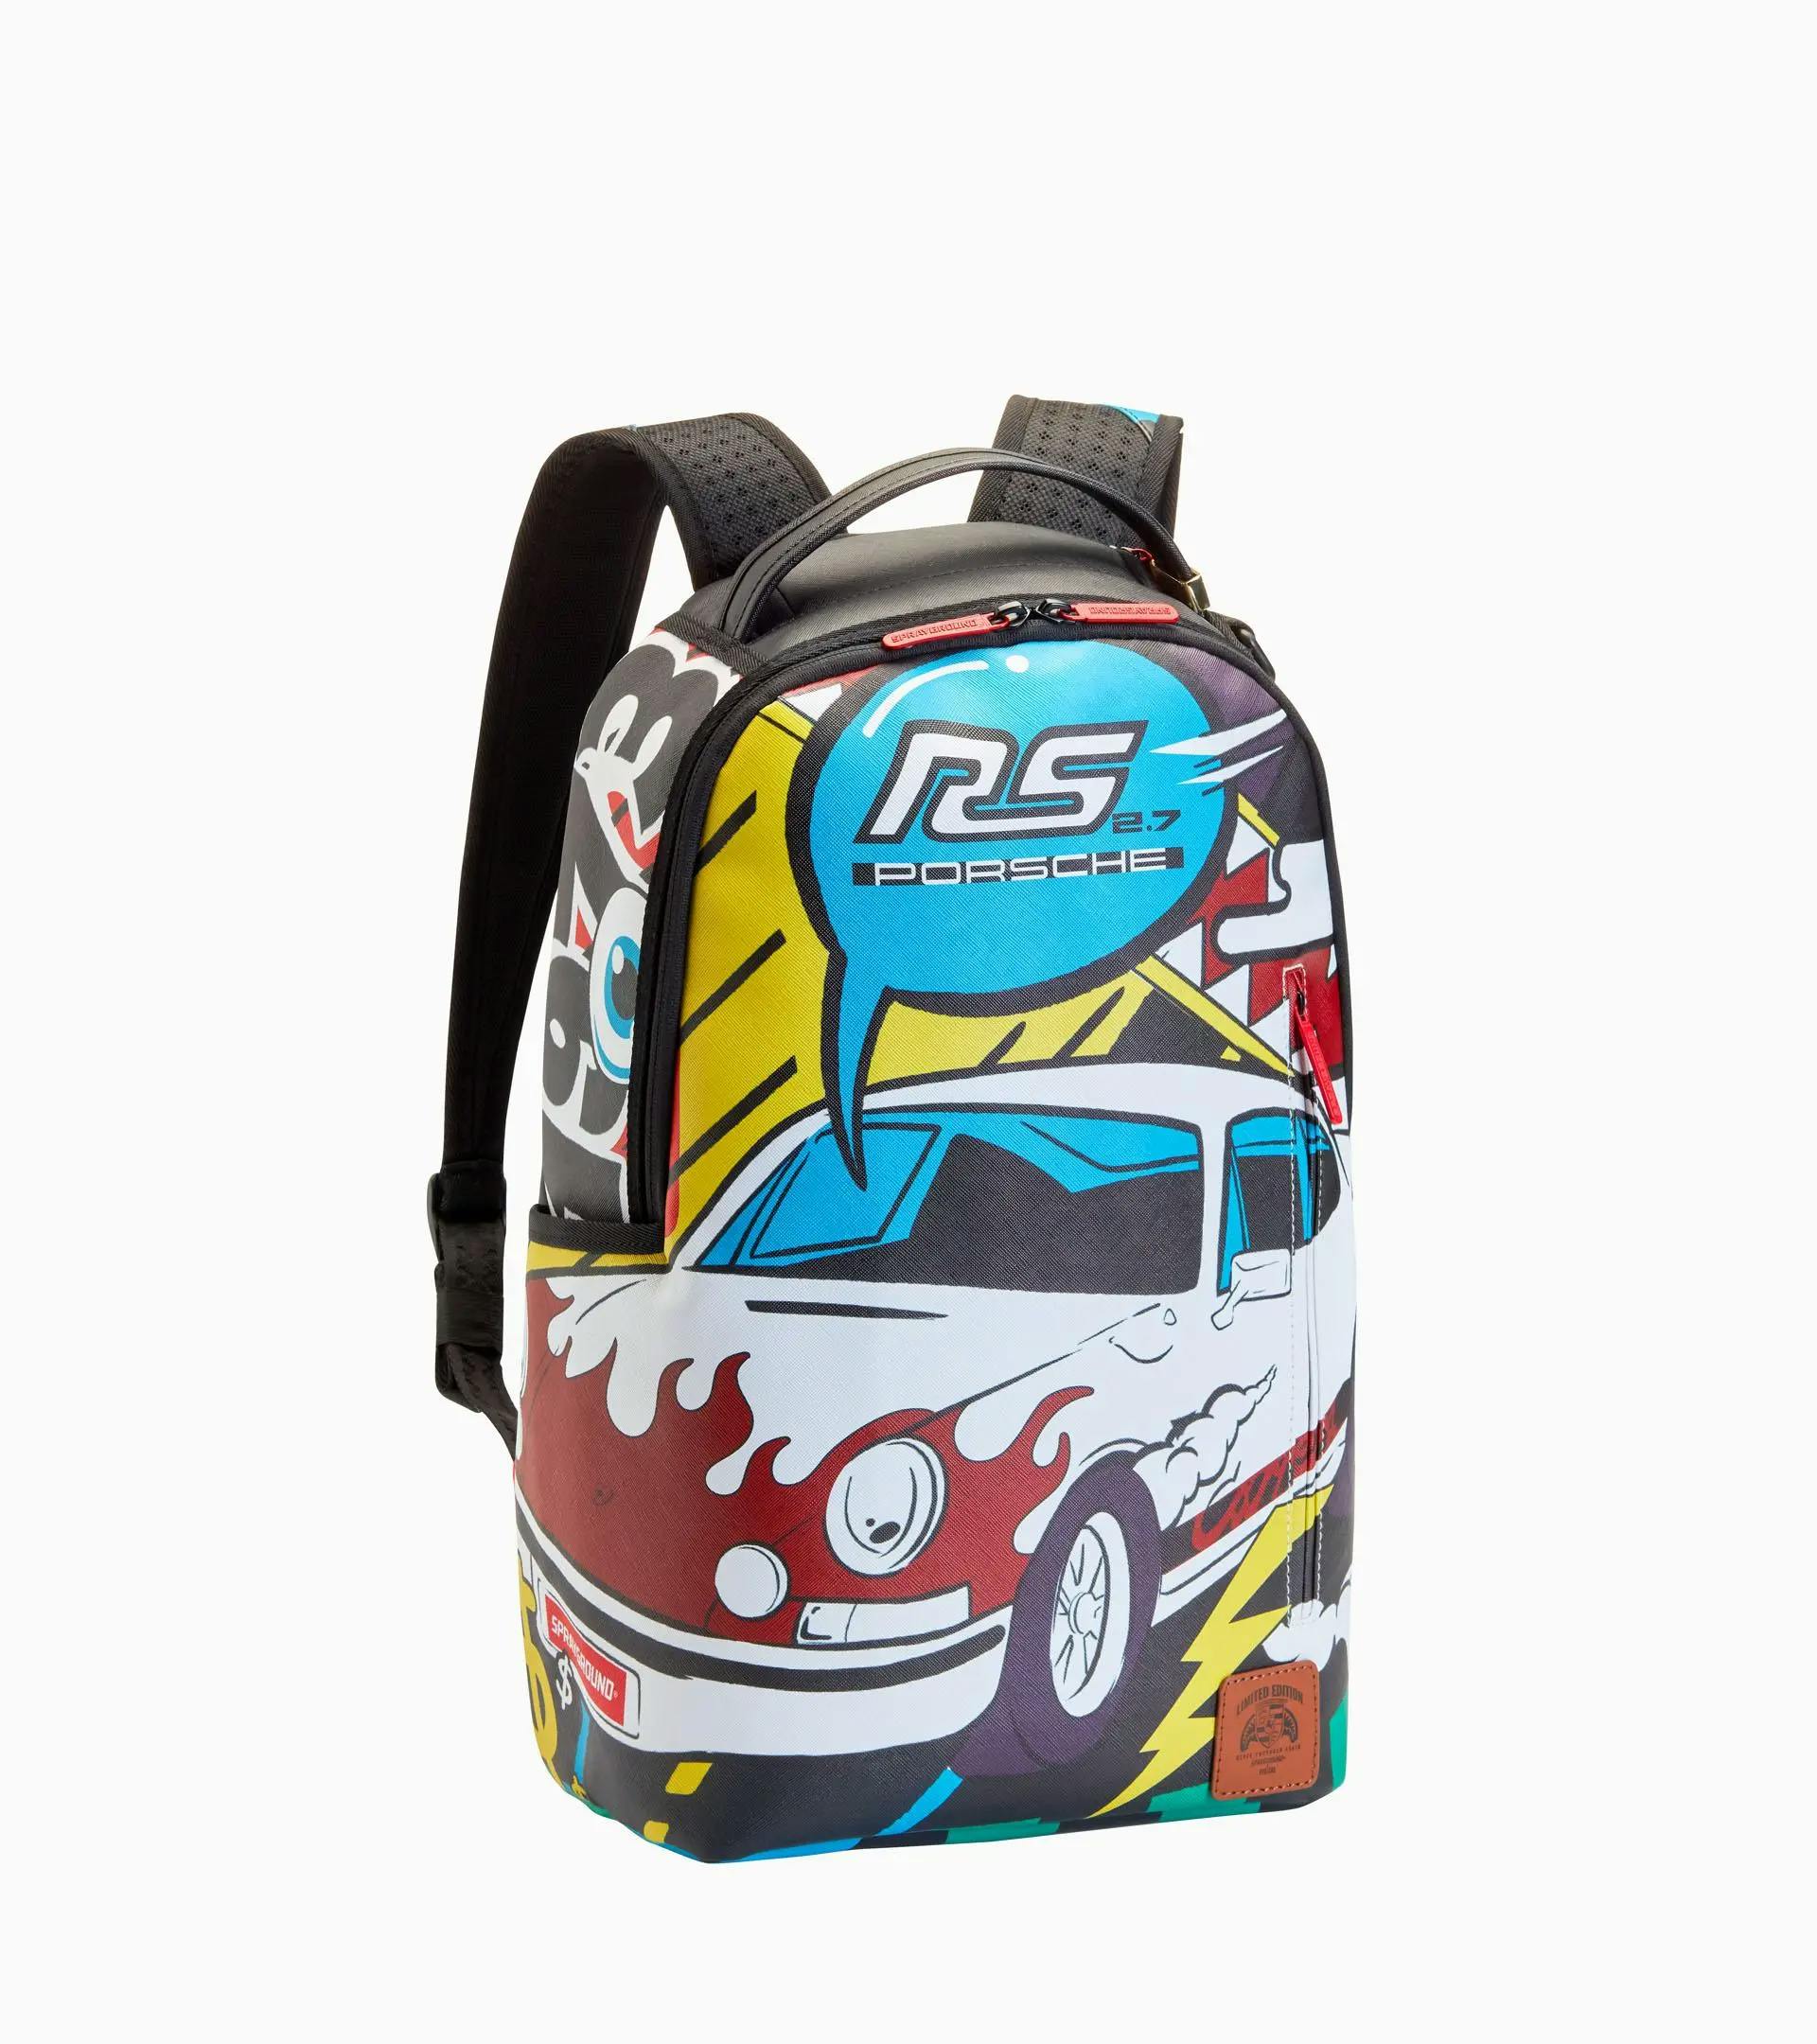 Sprayground backpack limited edition